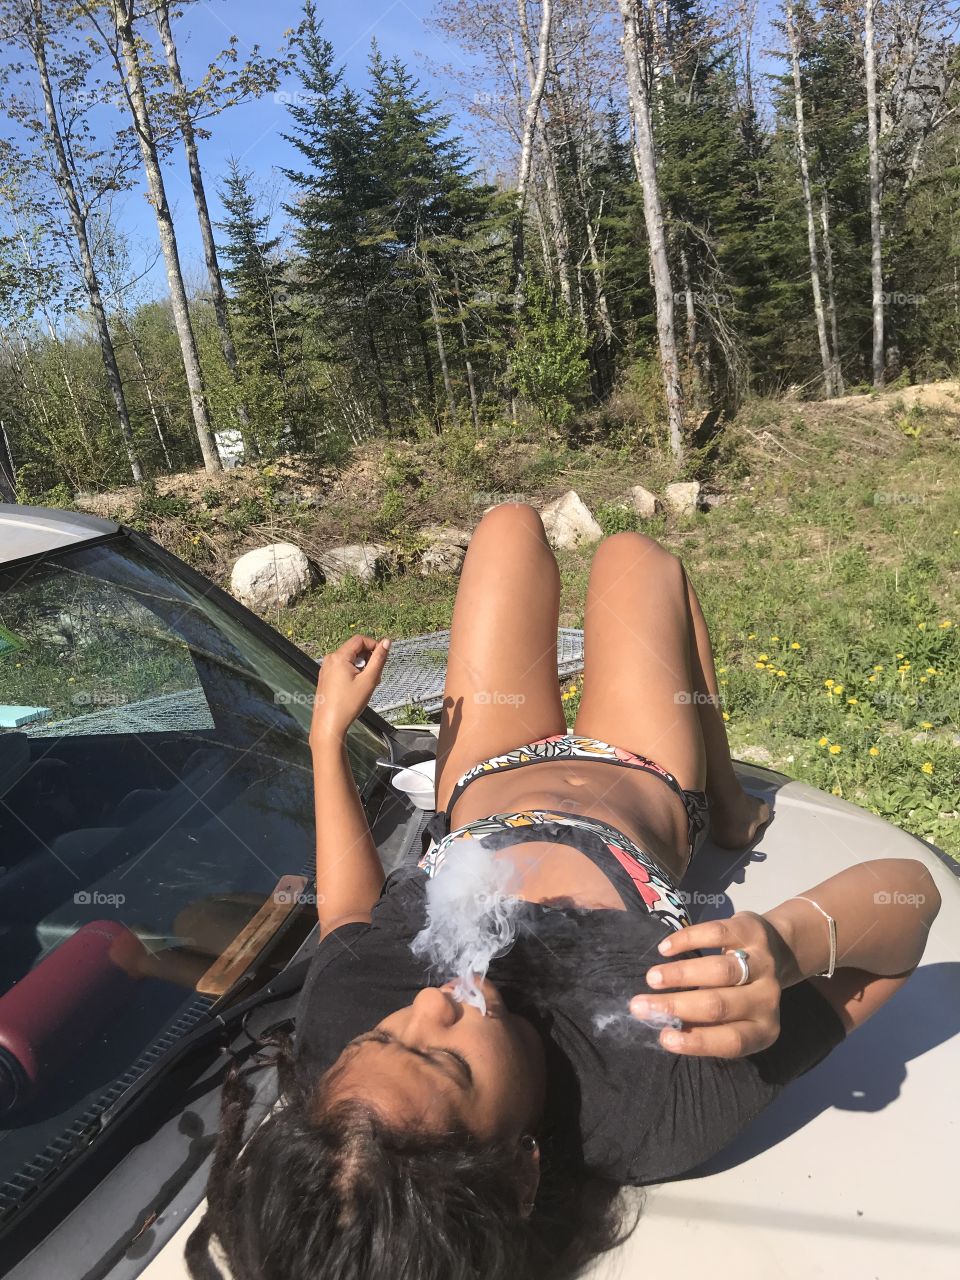 Caramel colored mamasita smoking her smoke and catching her sun on the hood of her Honda! 